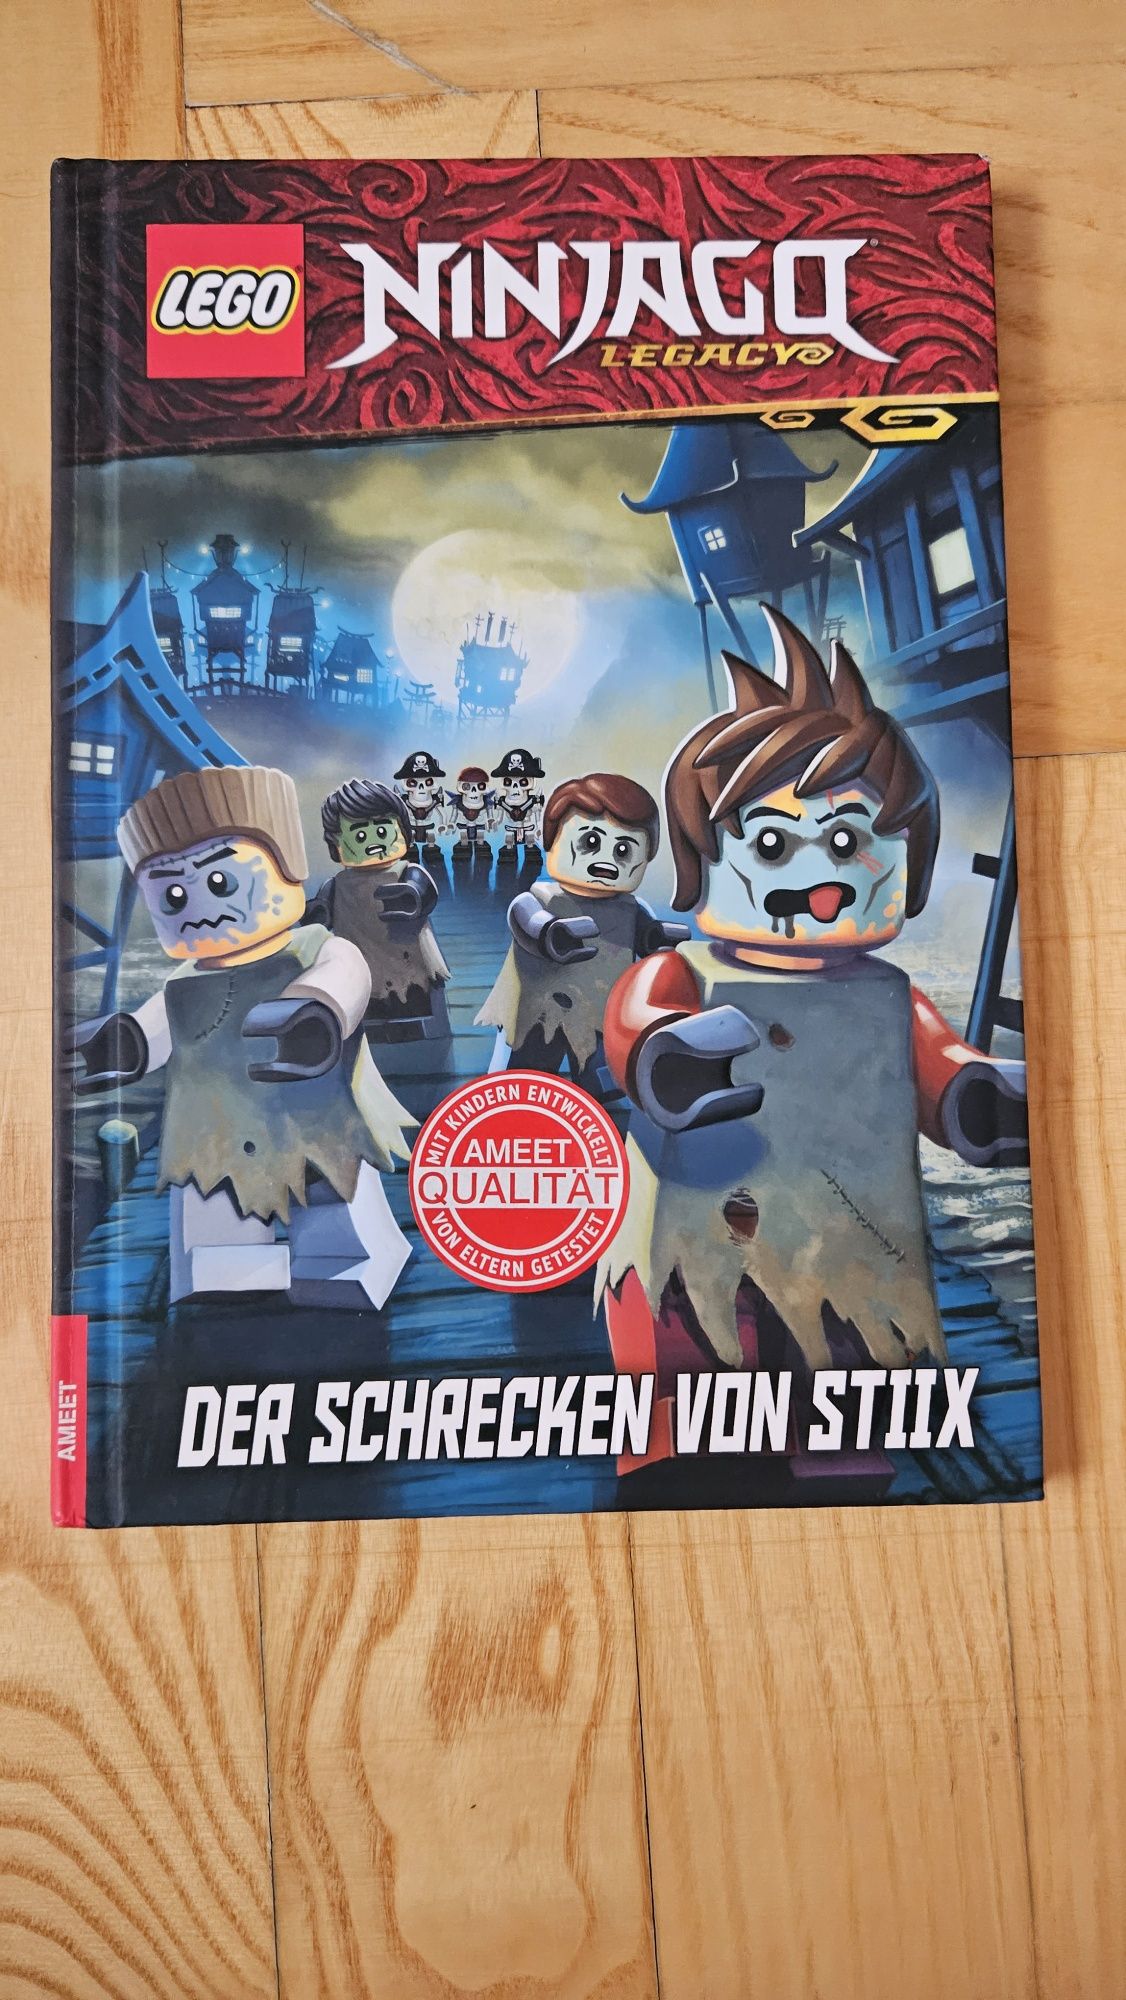 Книга Ninjago на немецком